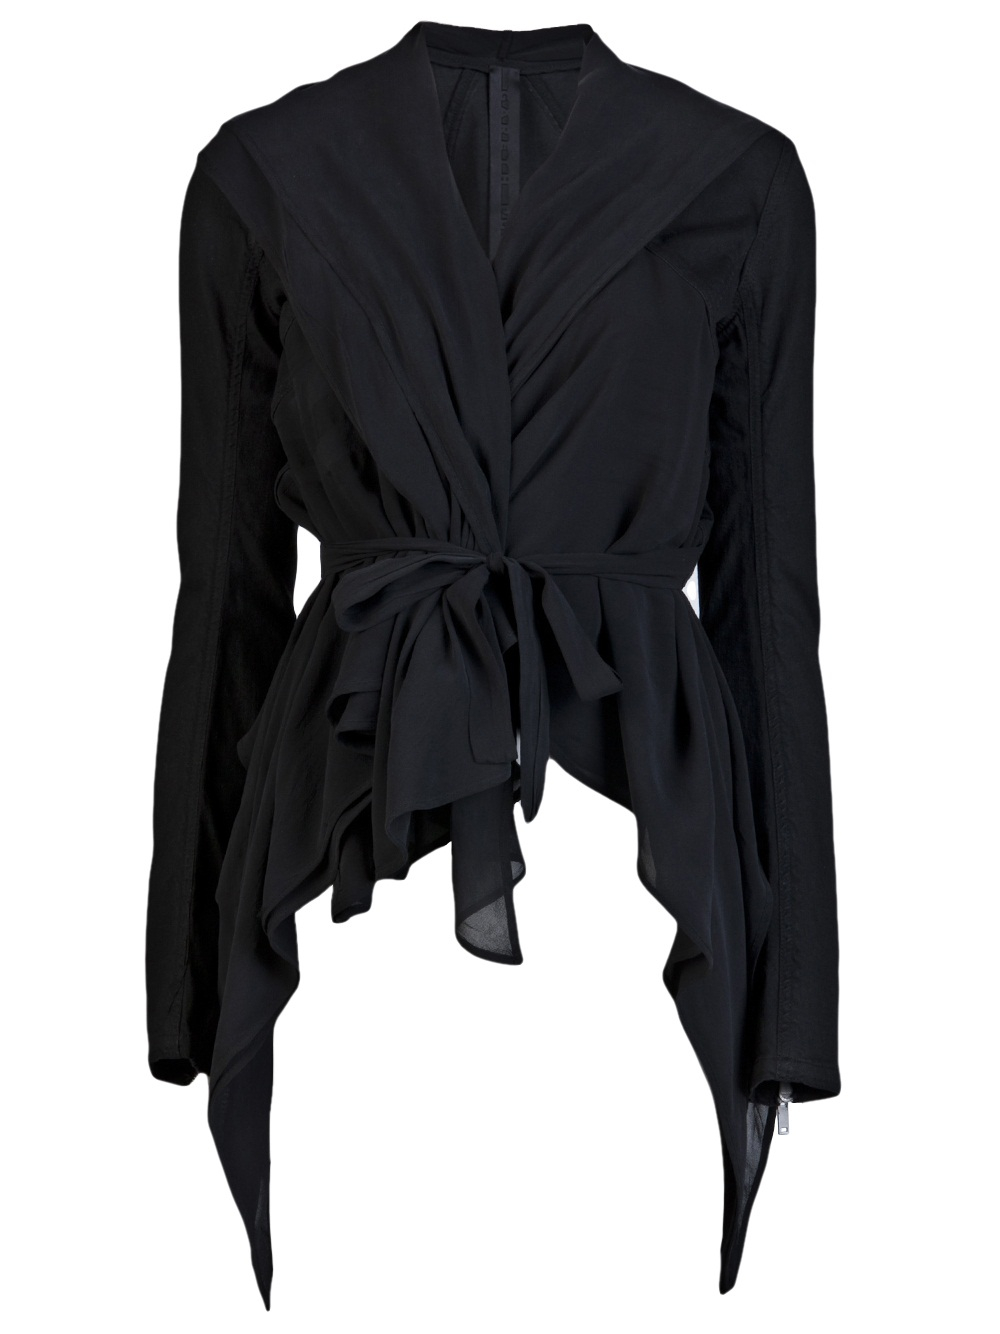 Lyst - Gareth Pugh Frill Collar Jacket in Black